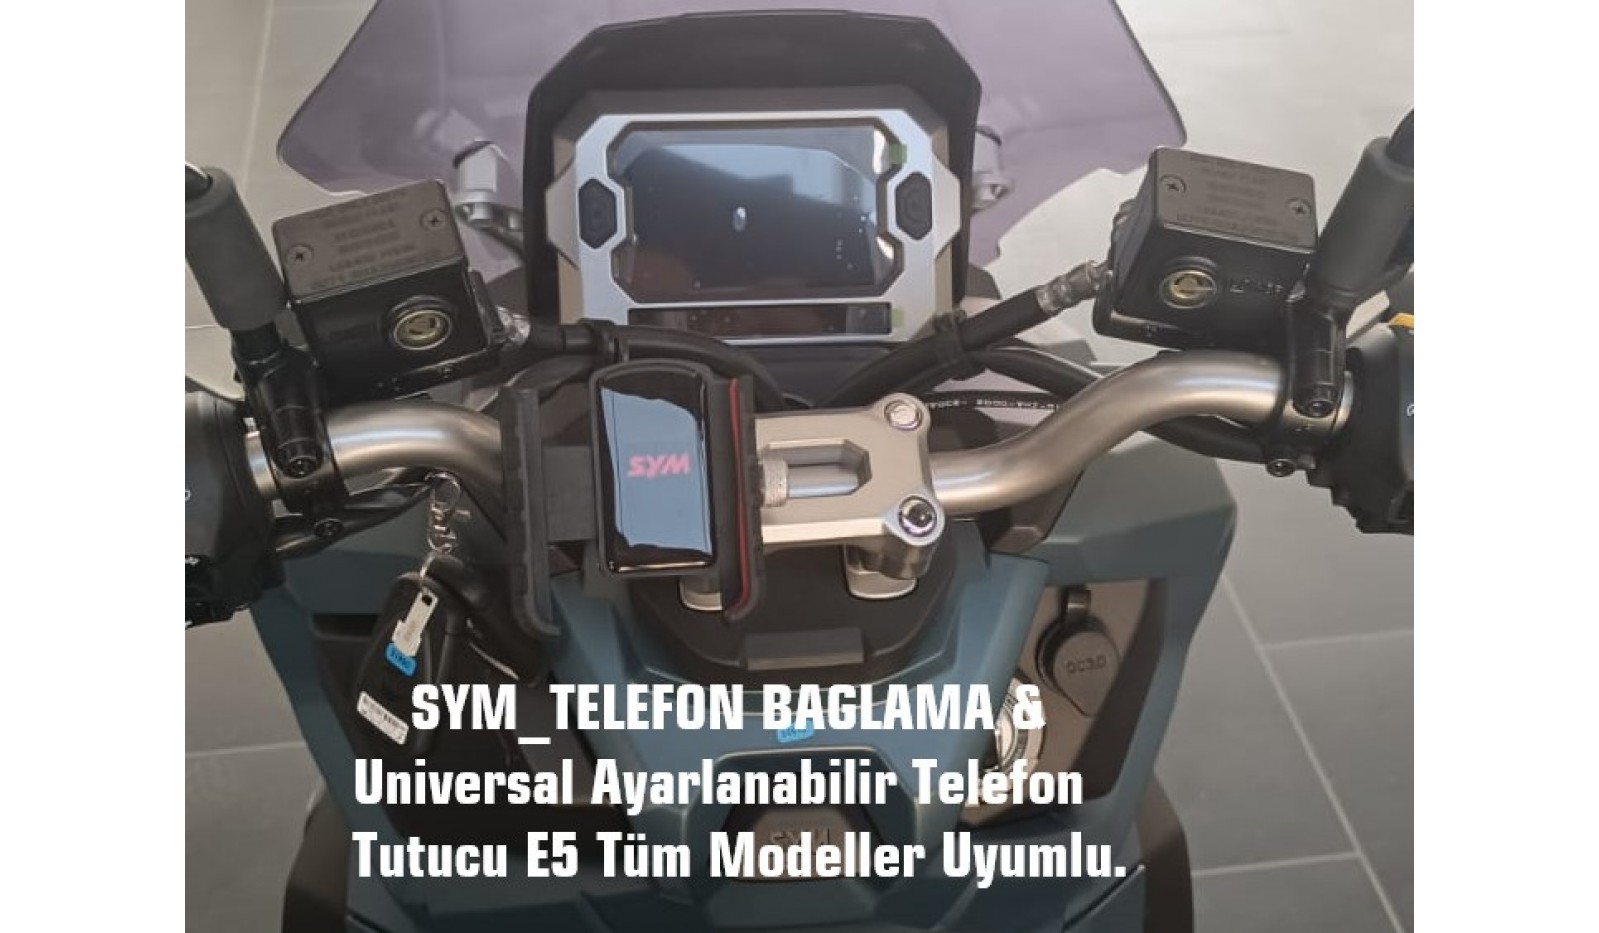 SYM JETX TCS 125 TELEFON BAGLAMA & UnIversal AyarlanabIlIr Telefon Tutucu